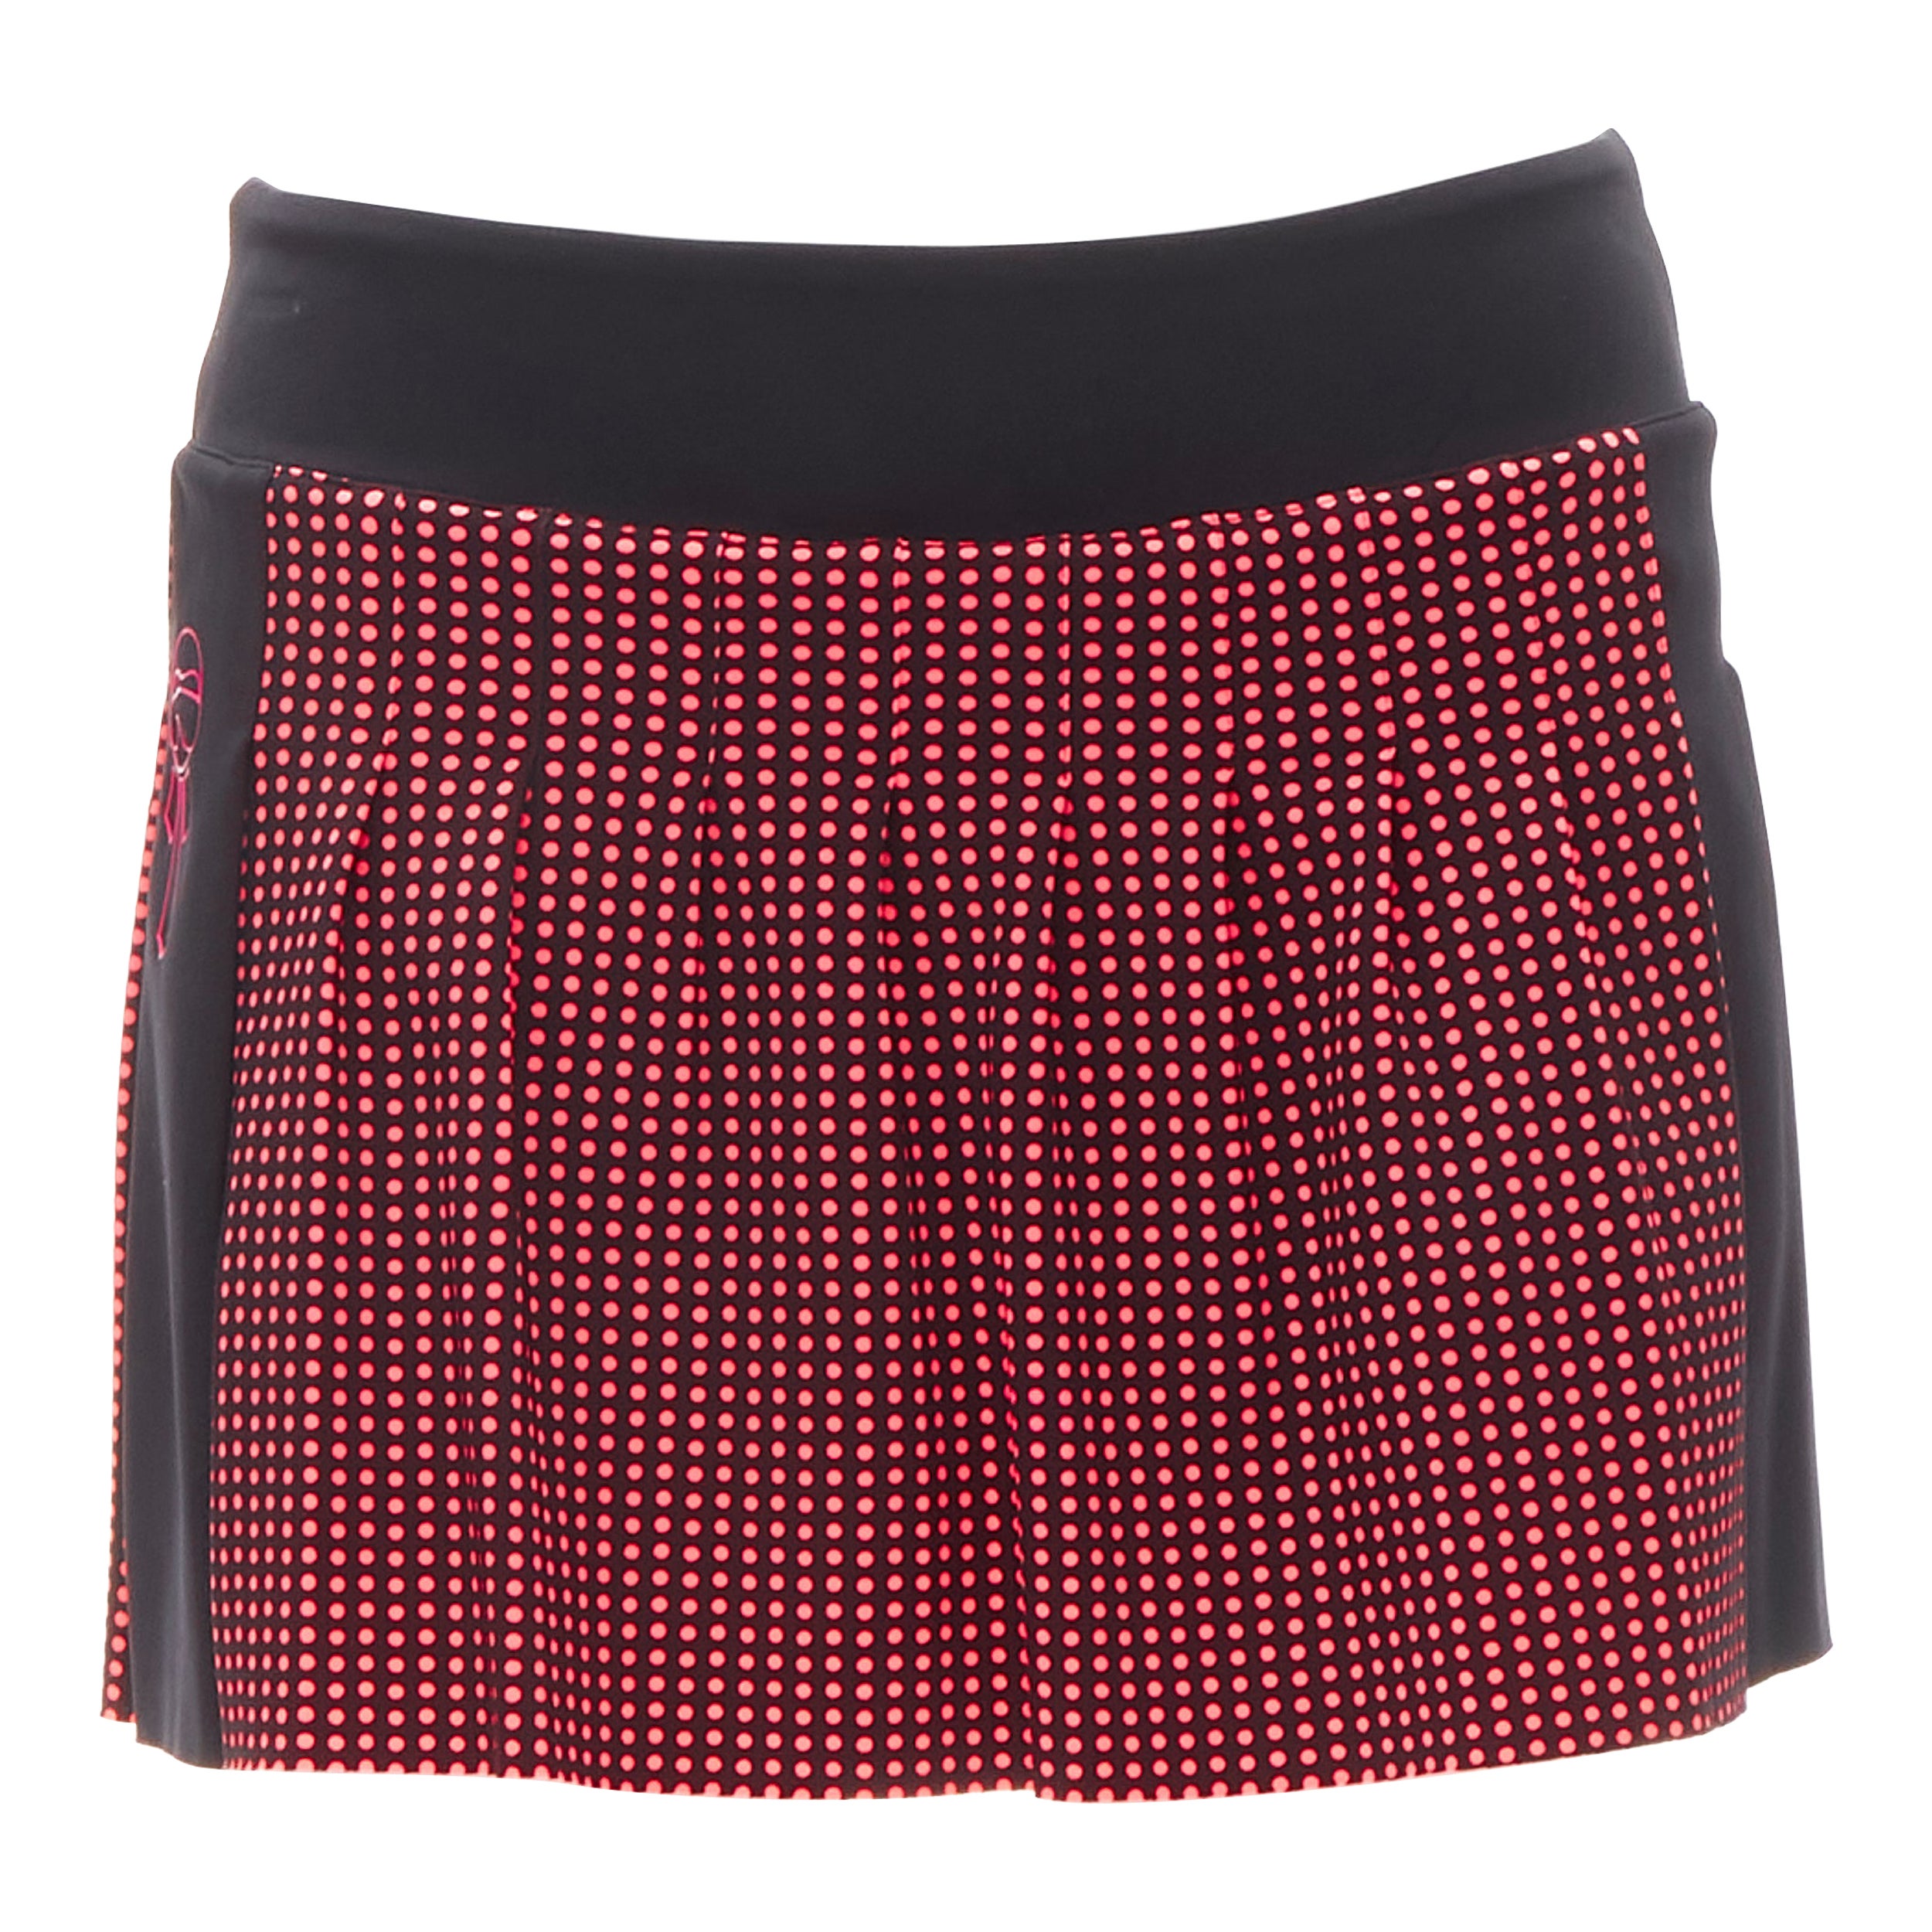 FENDI Activewear Karl Love black pink polka dot lined pleated skirt S For Sale